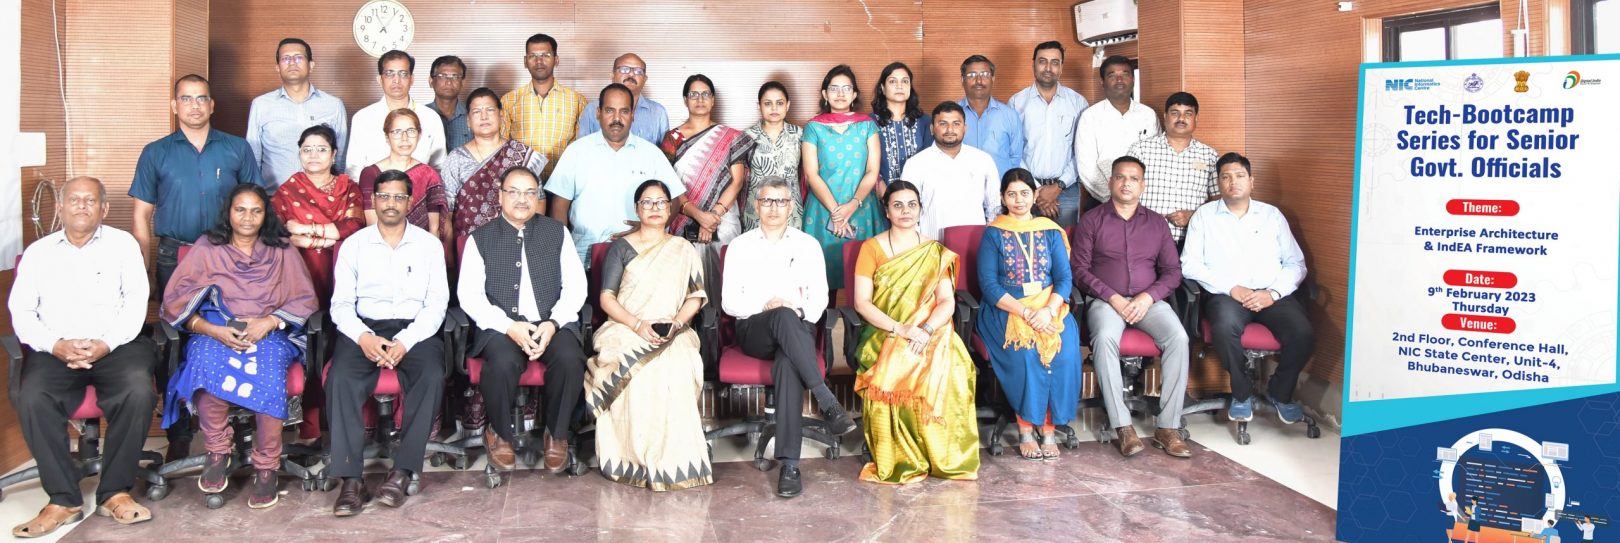 NIC, Bhubaneswar Organised Tech-Bootcamp on Enterprise Architecture and IndEA Framework.